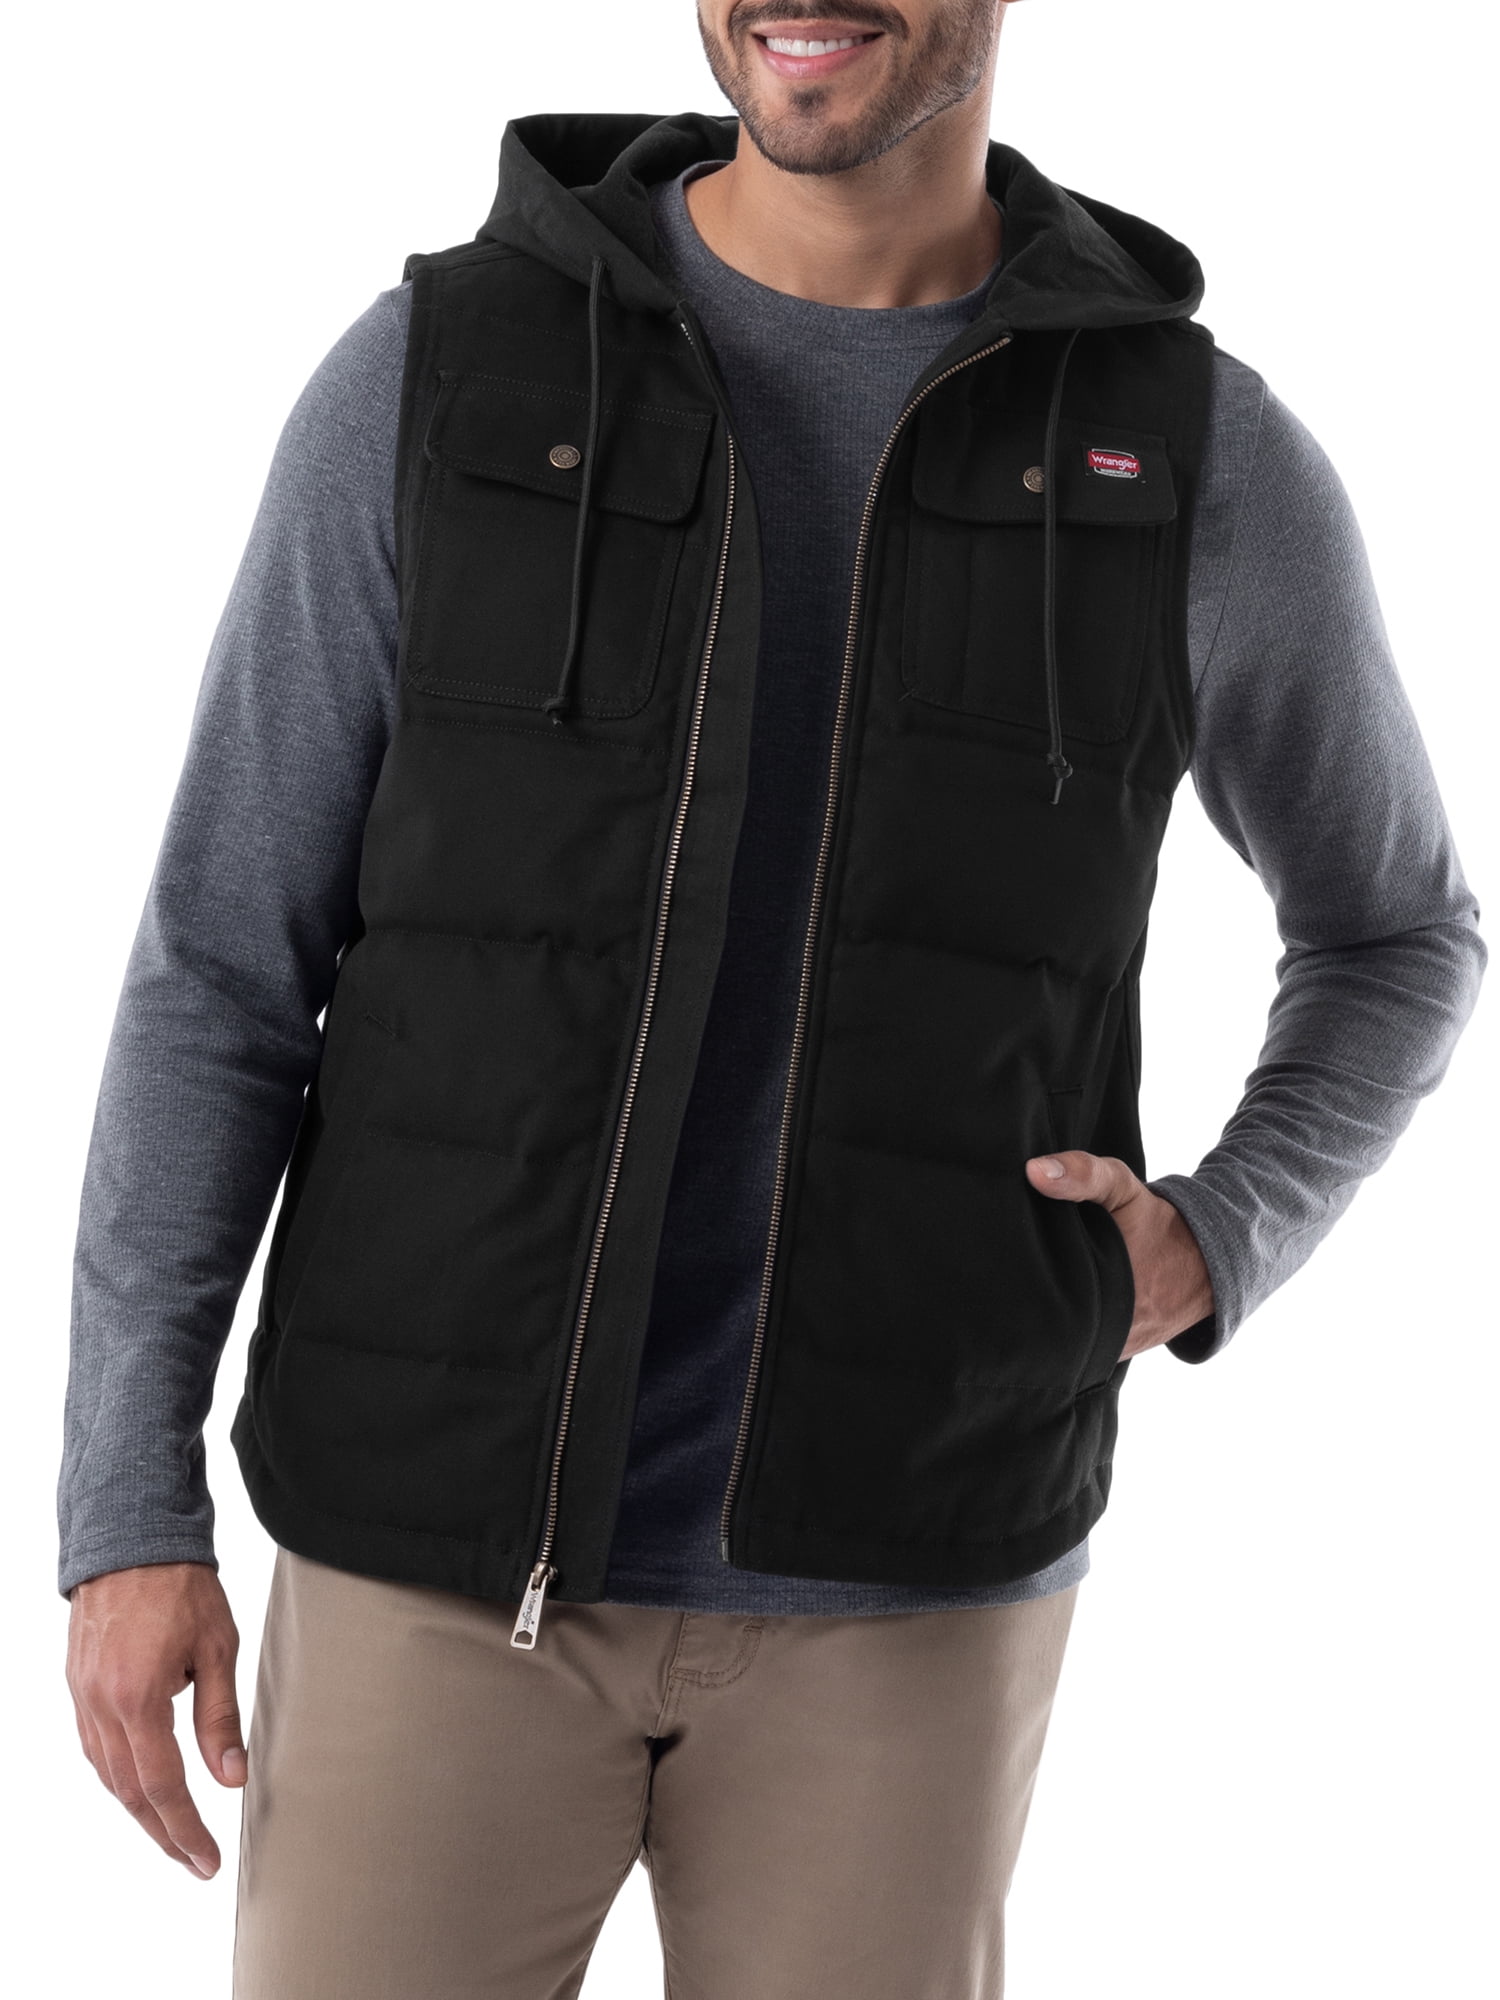 Buy Wrangler Workwear Mens Work Vest with Hood Online at Lowest Price in  Ubuy Nepal. 769660314